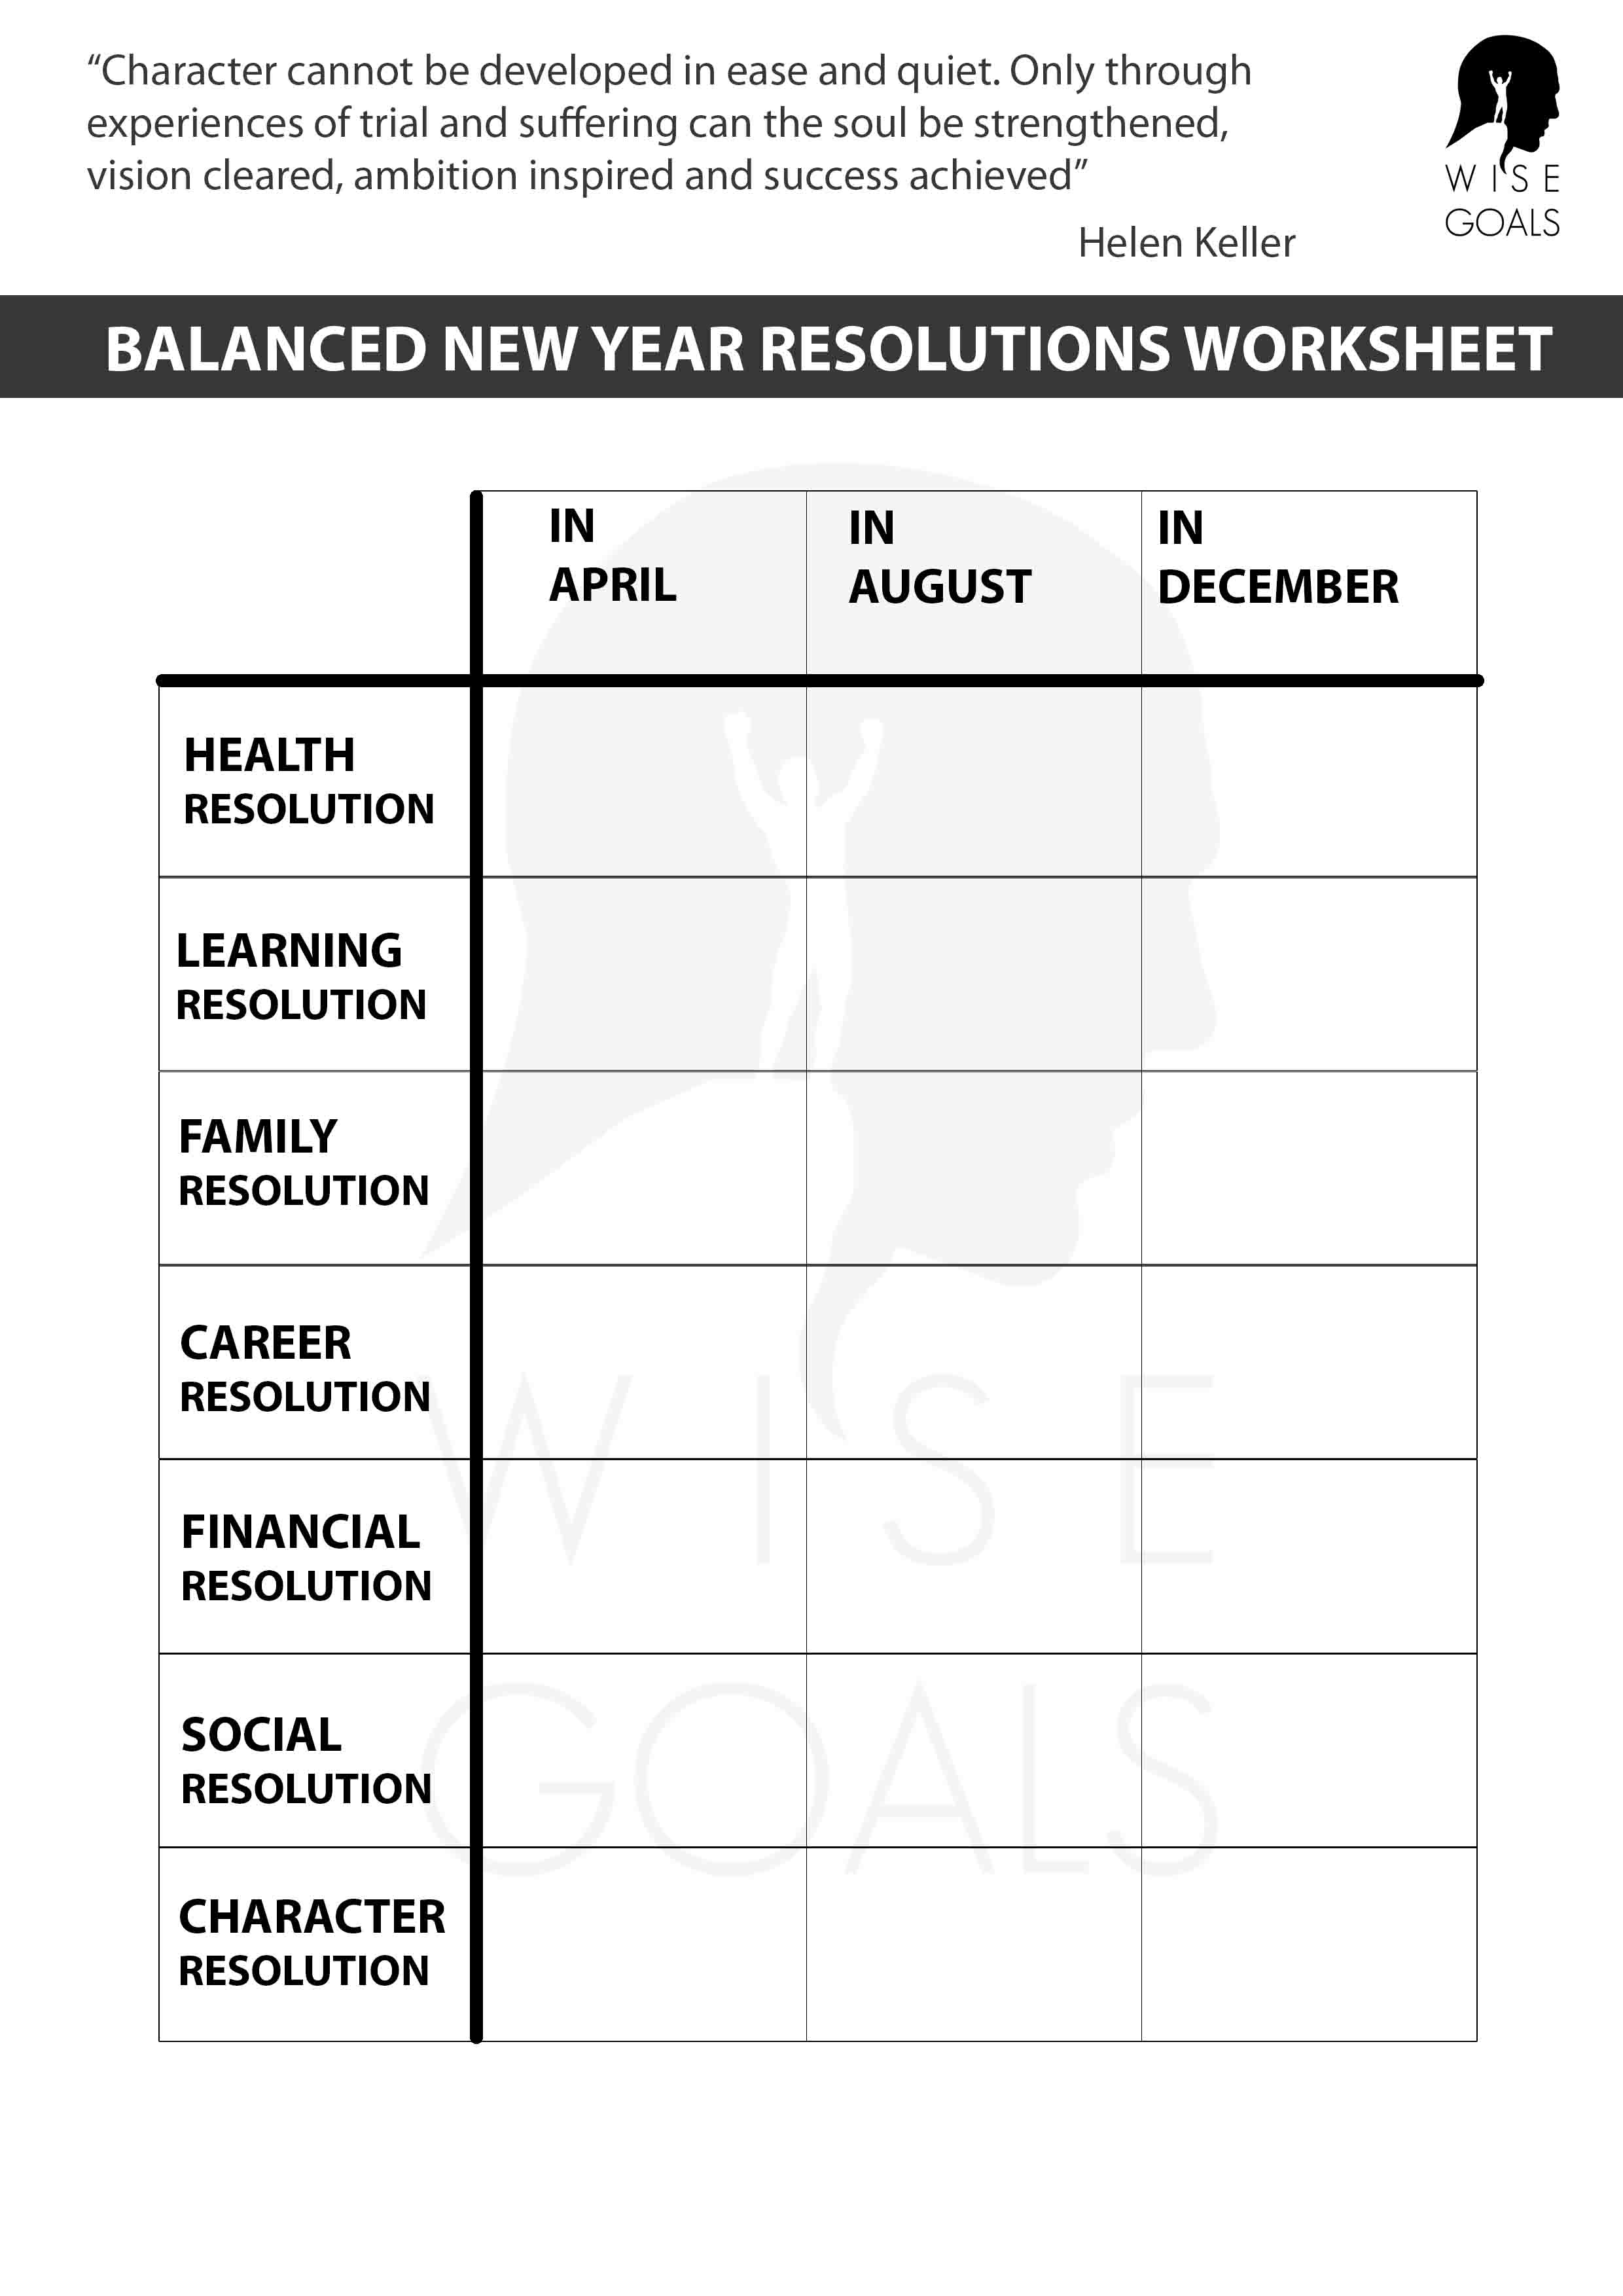 Balanced new year's resolutions